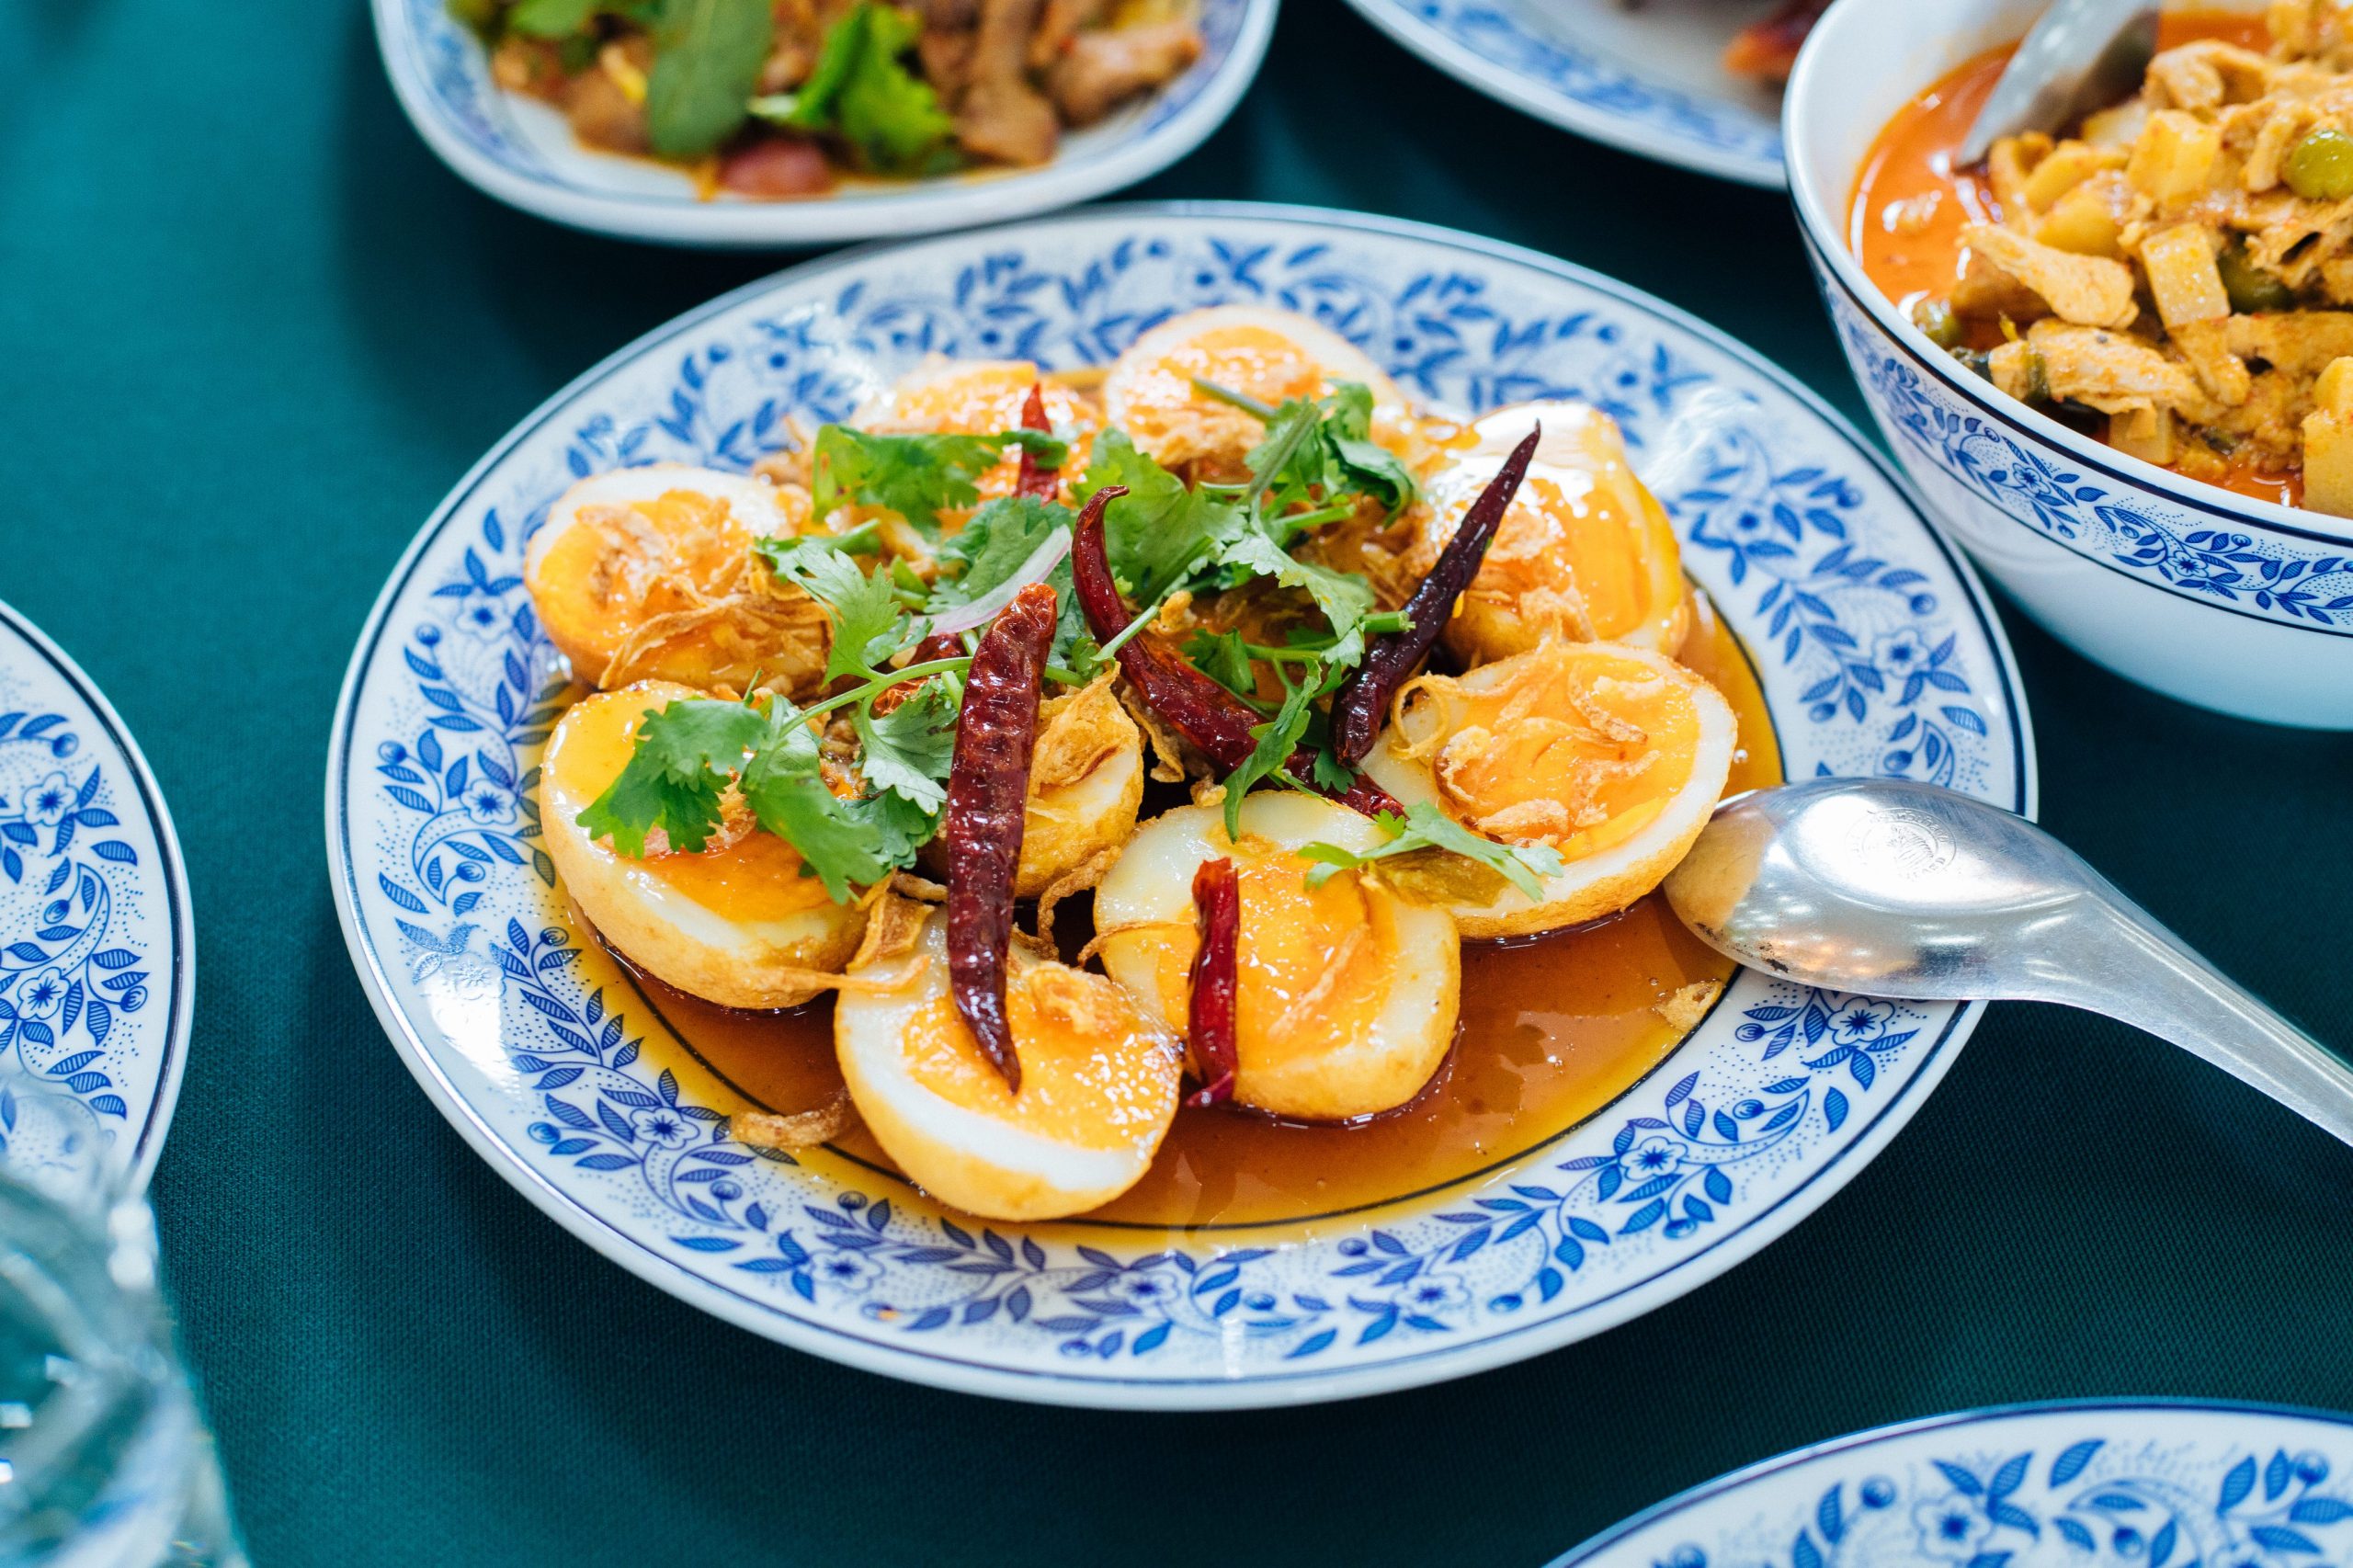 Жареные яйца зятя — необычная тайская закуска